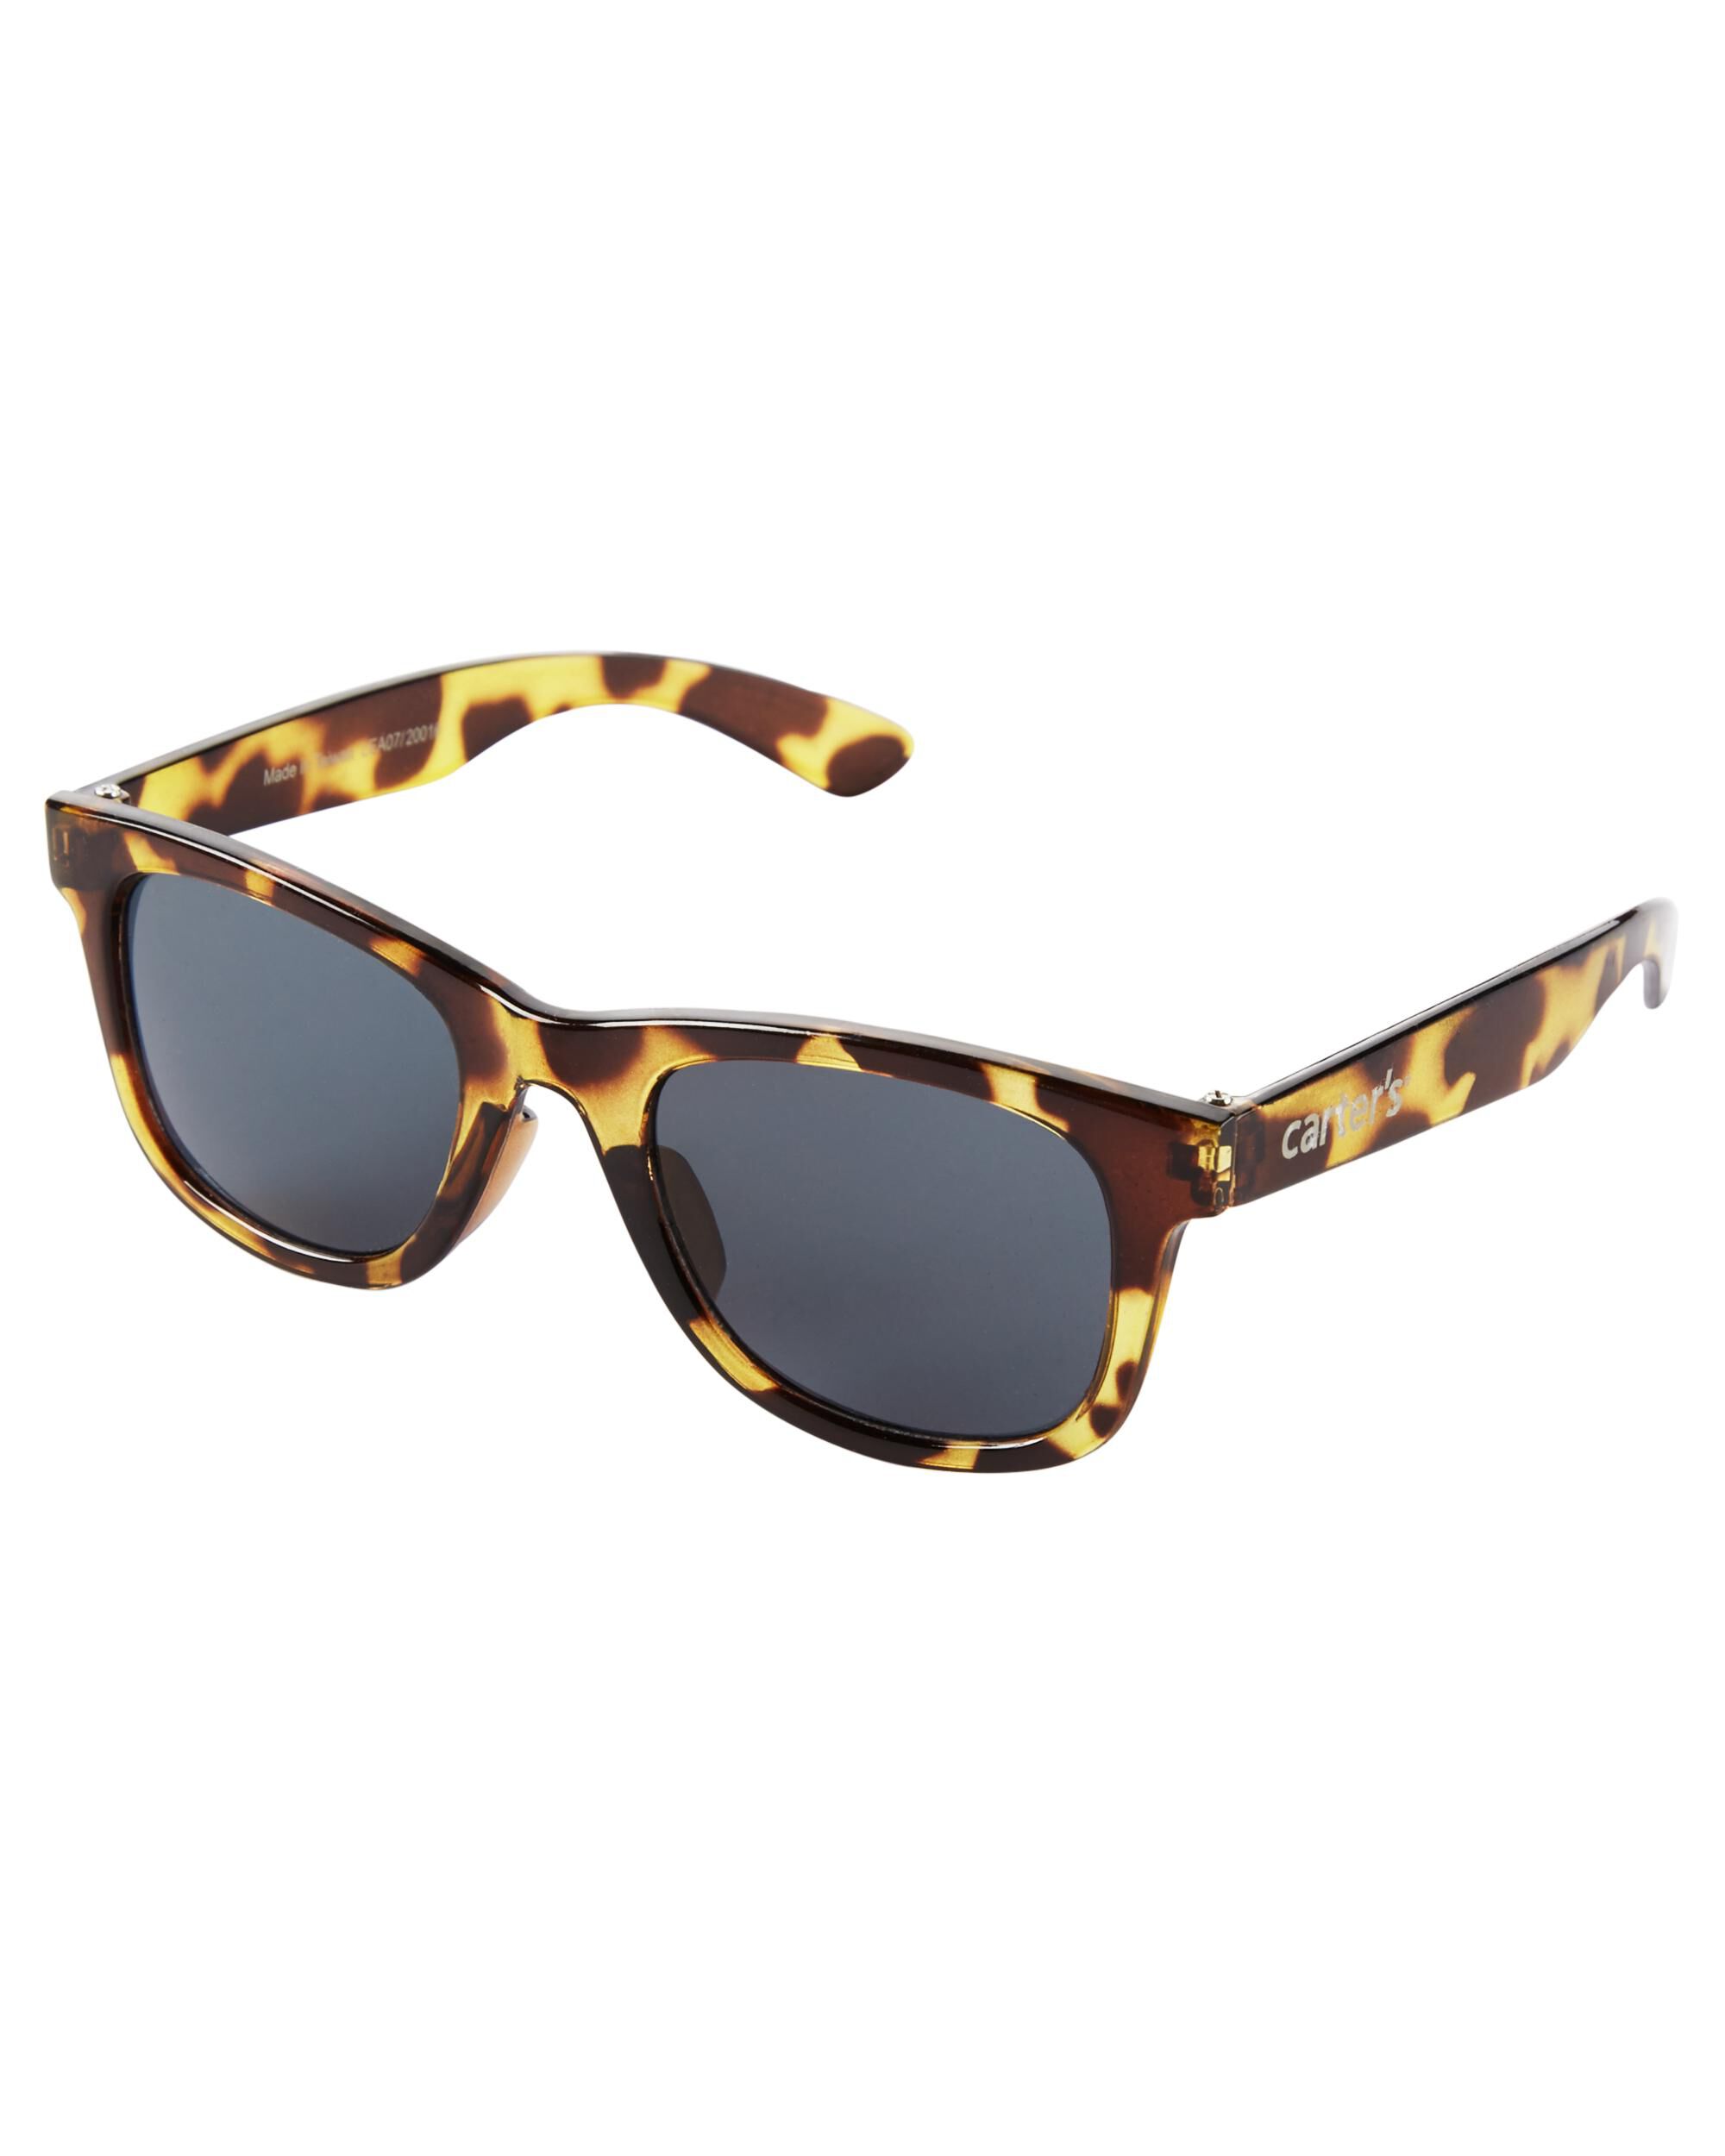 Tortoise Shell Classic Sunglasses Carters Oshkosh Canada